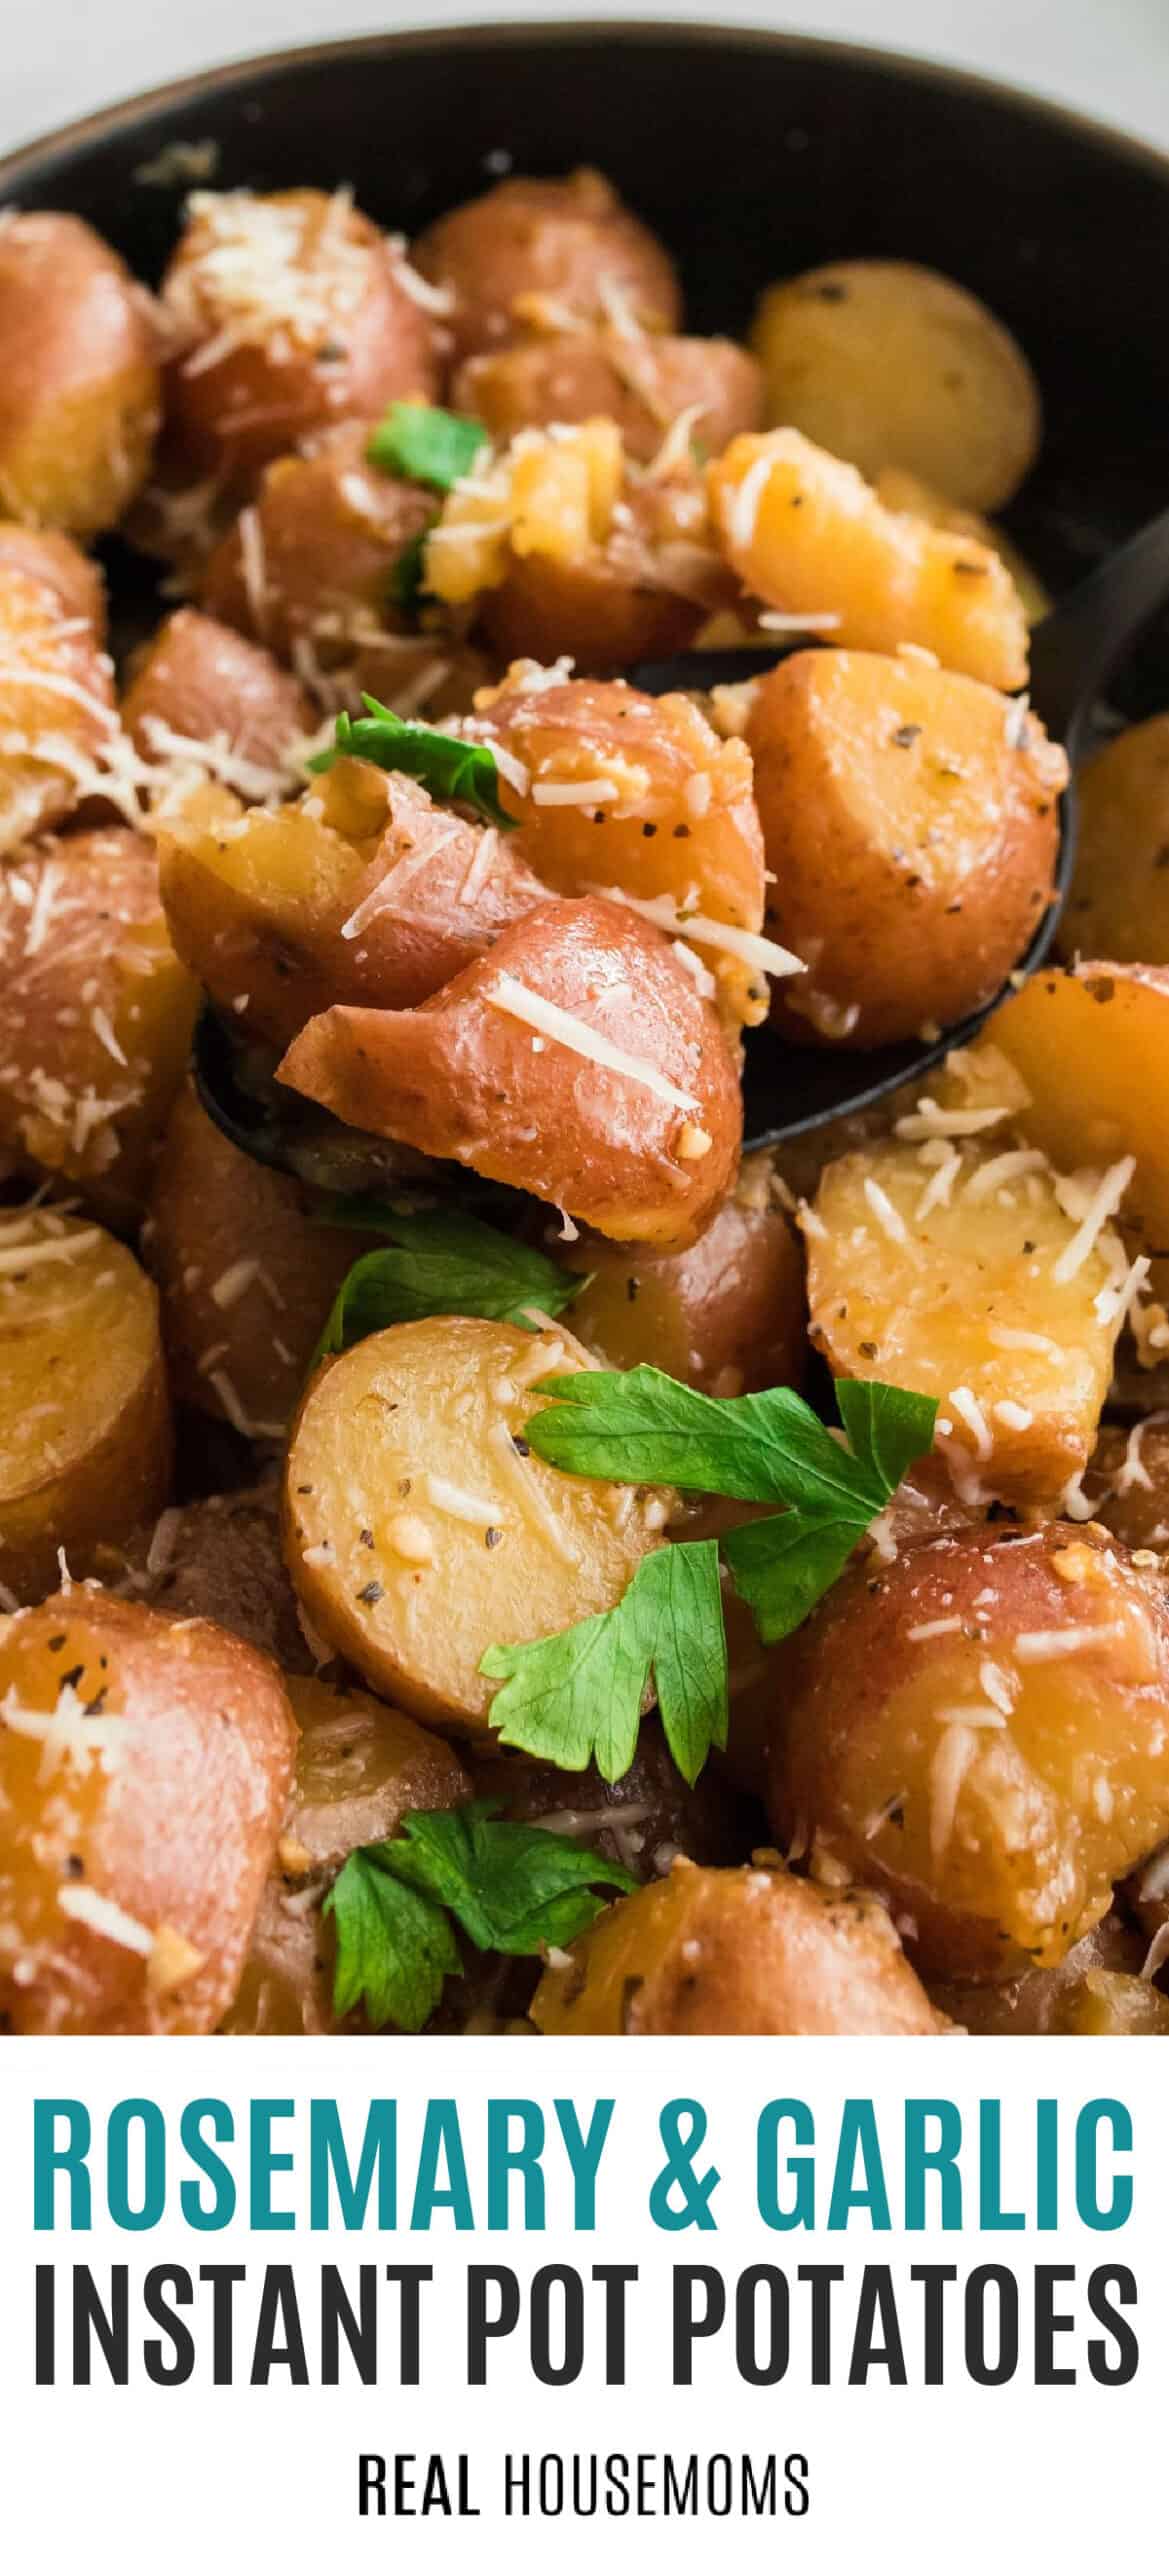 Ninja Foodi Red Potatoes with Rosemary and Garlic - The Tasty Travelers